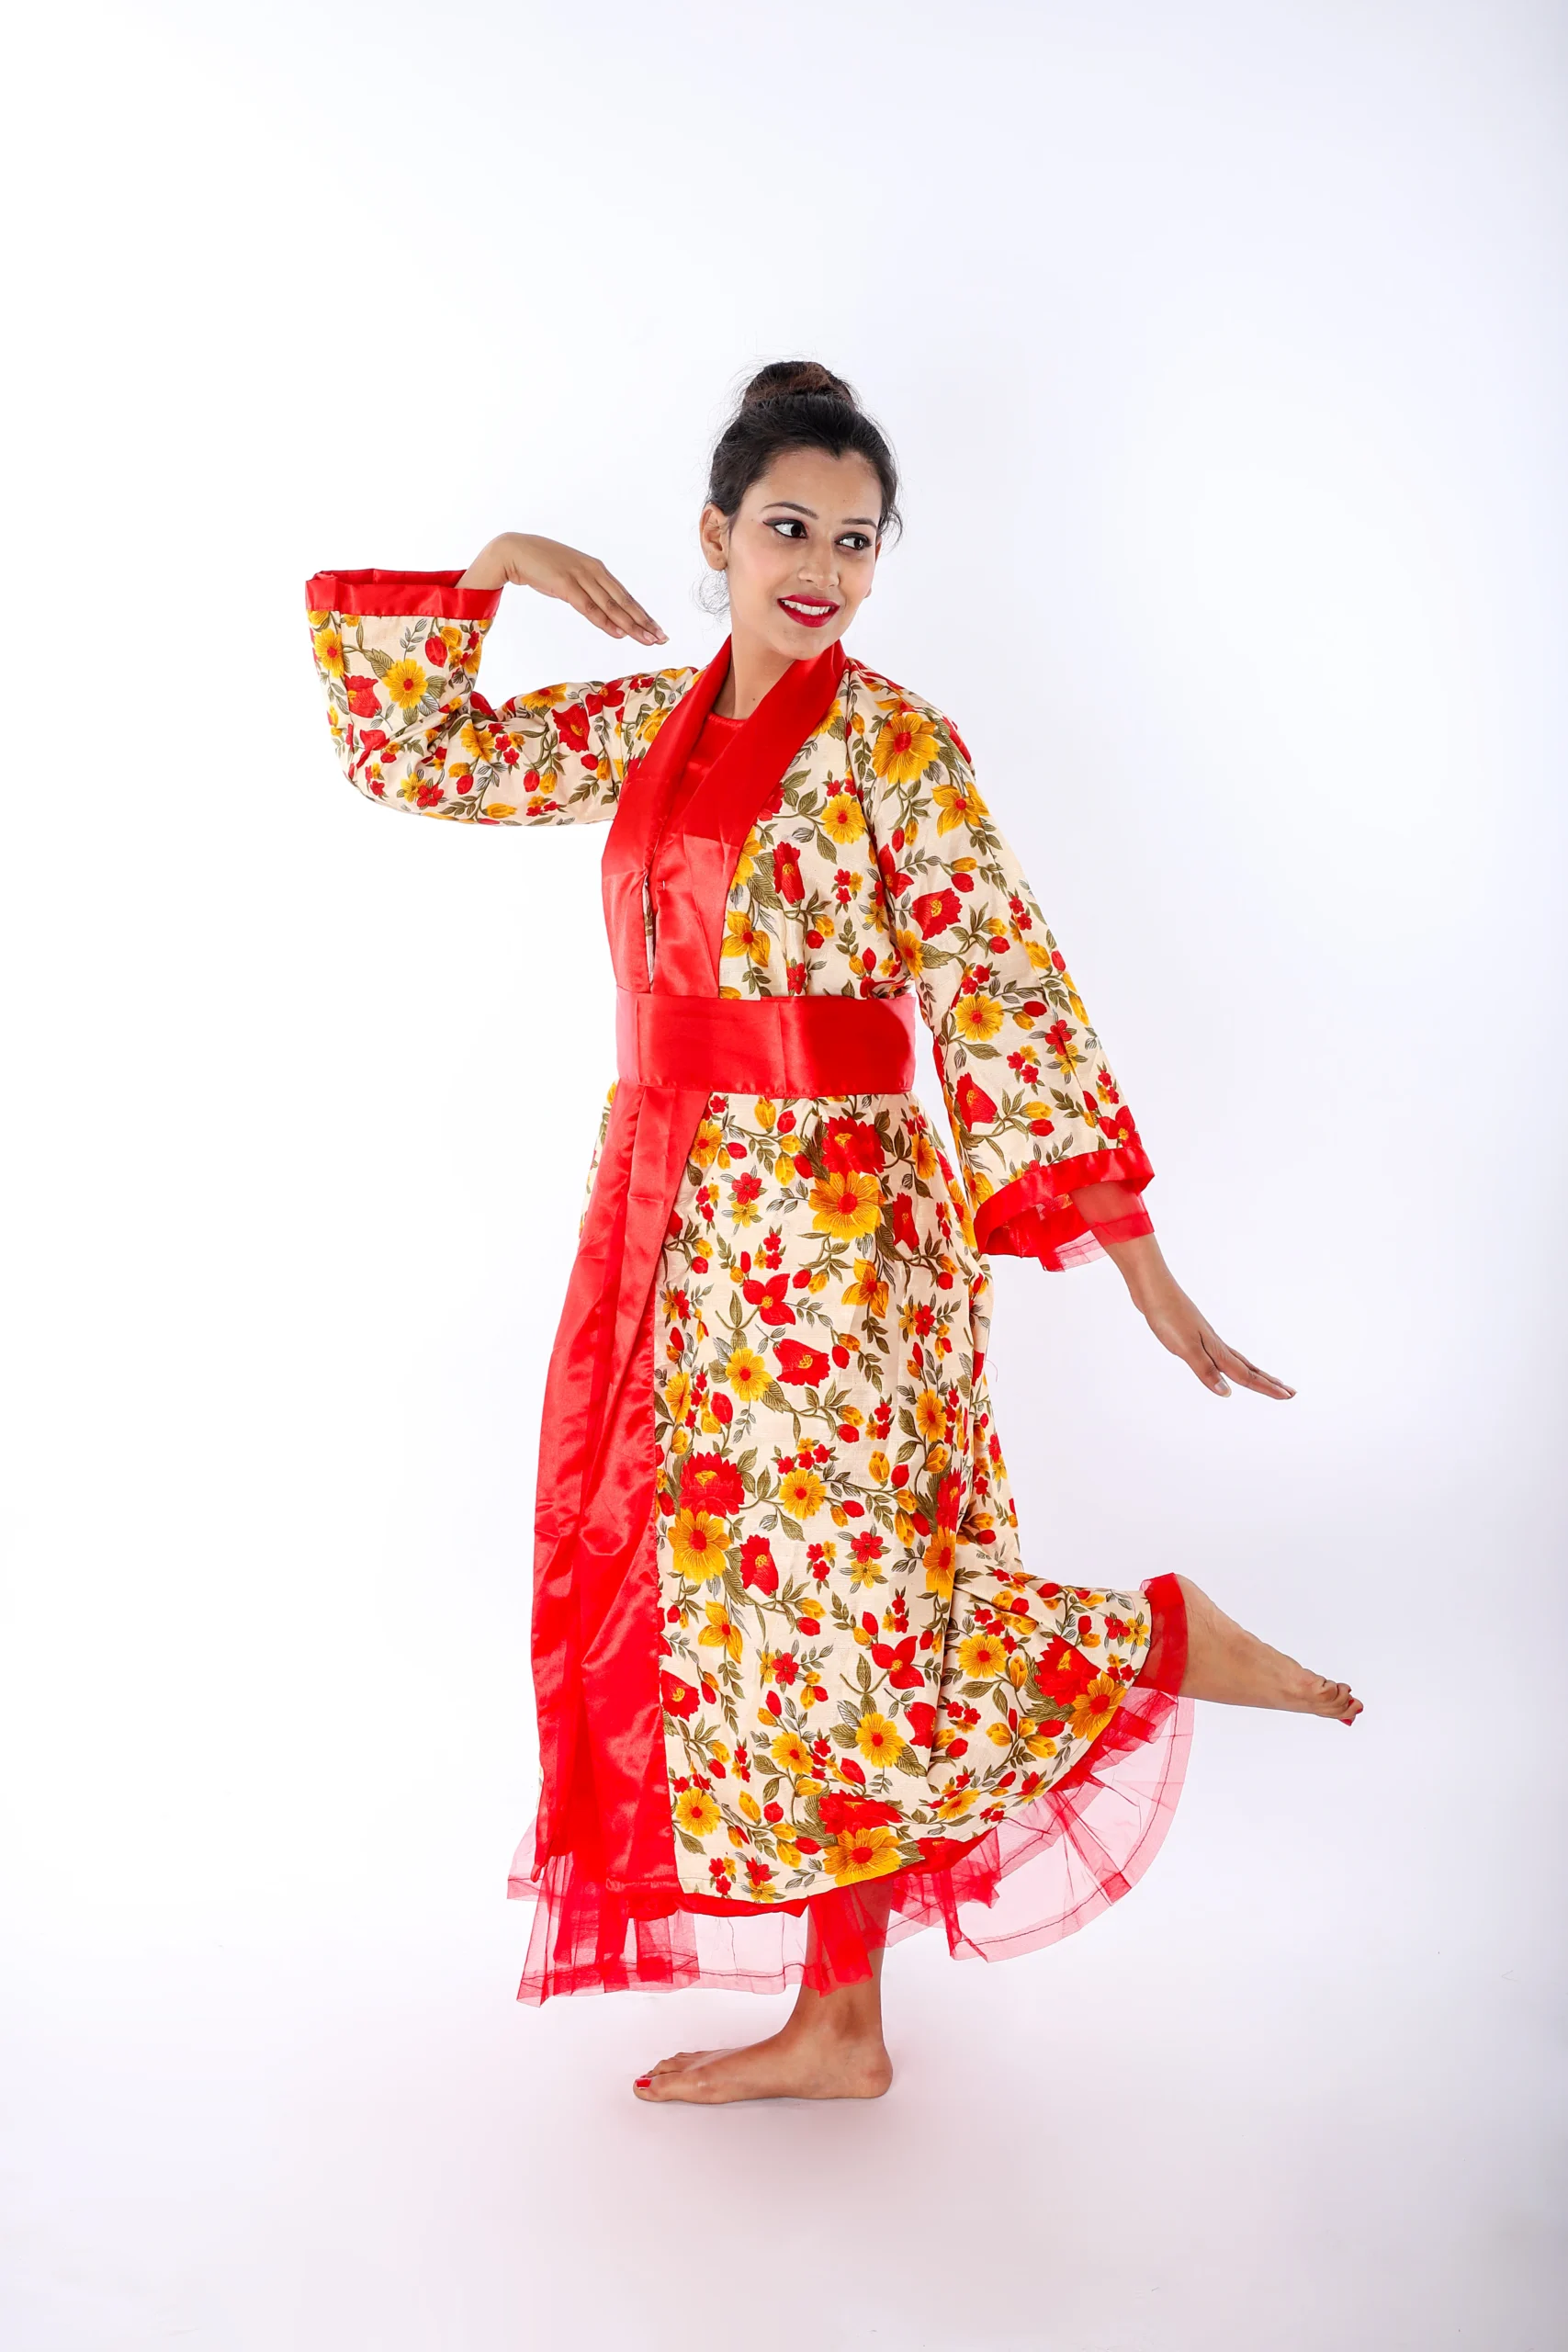 Kimono: The Japanese Garment with a Big Impact | Art & Object